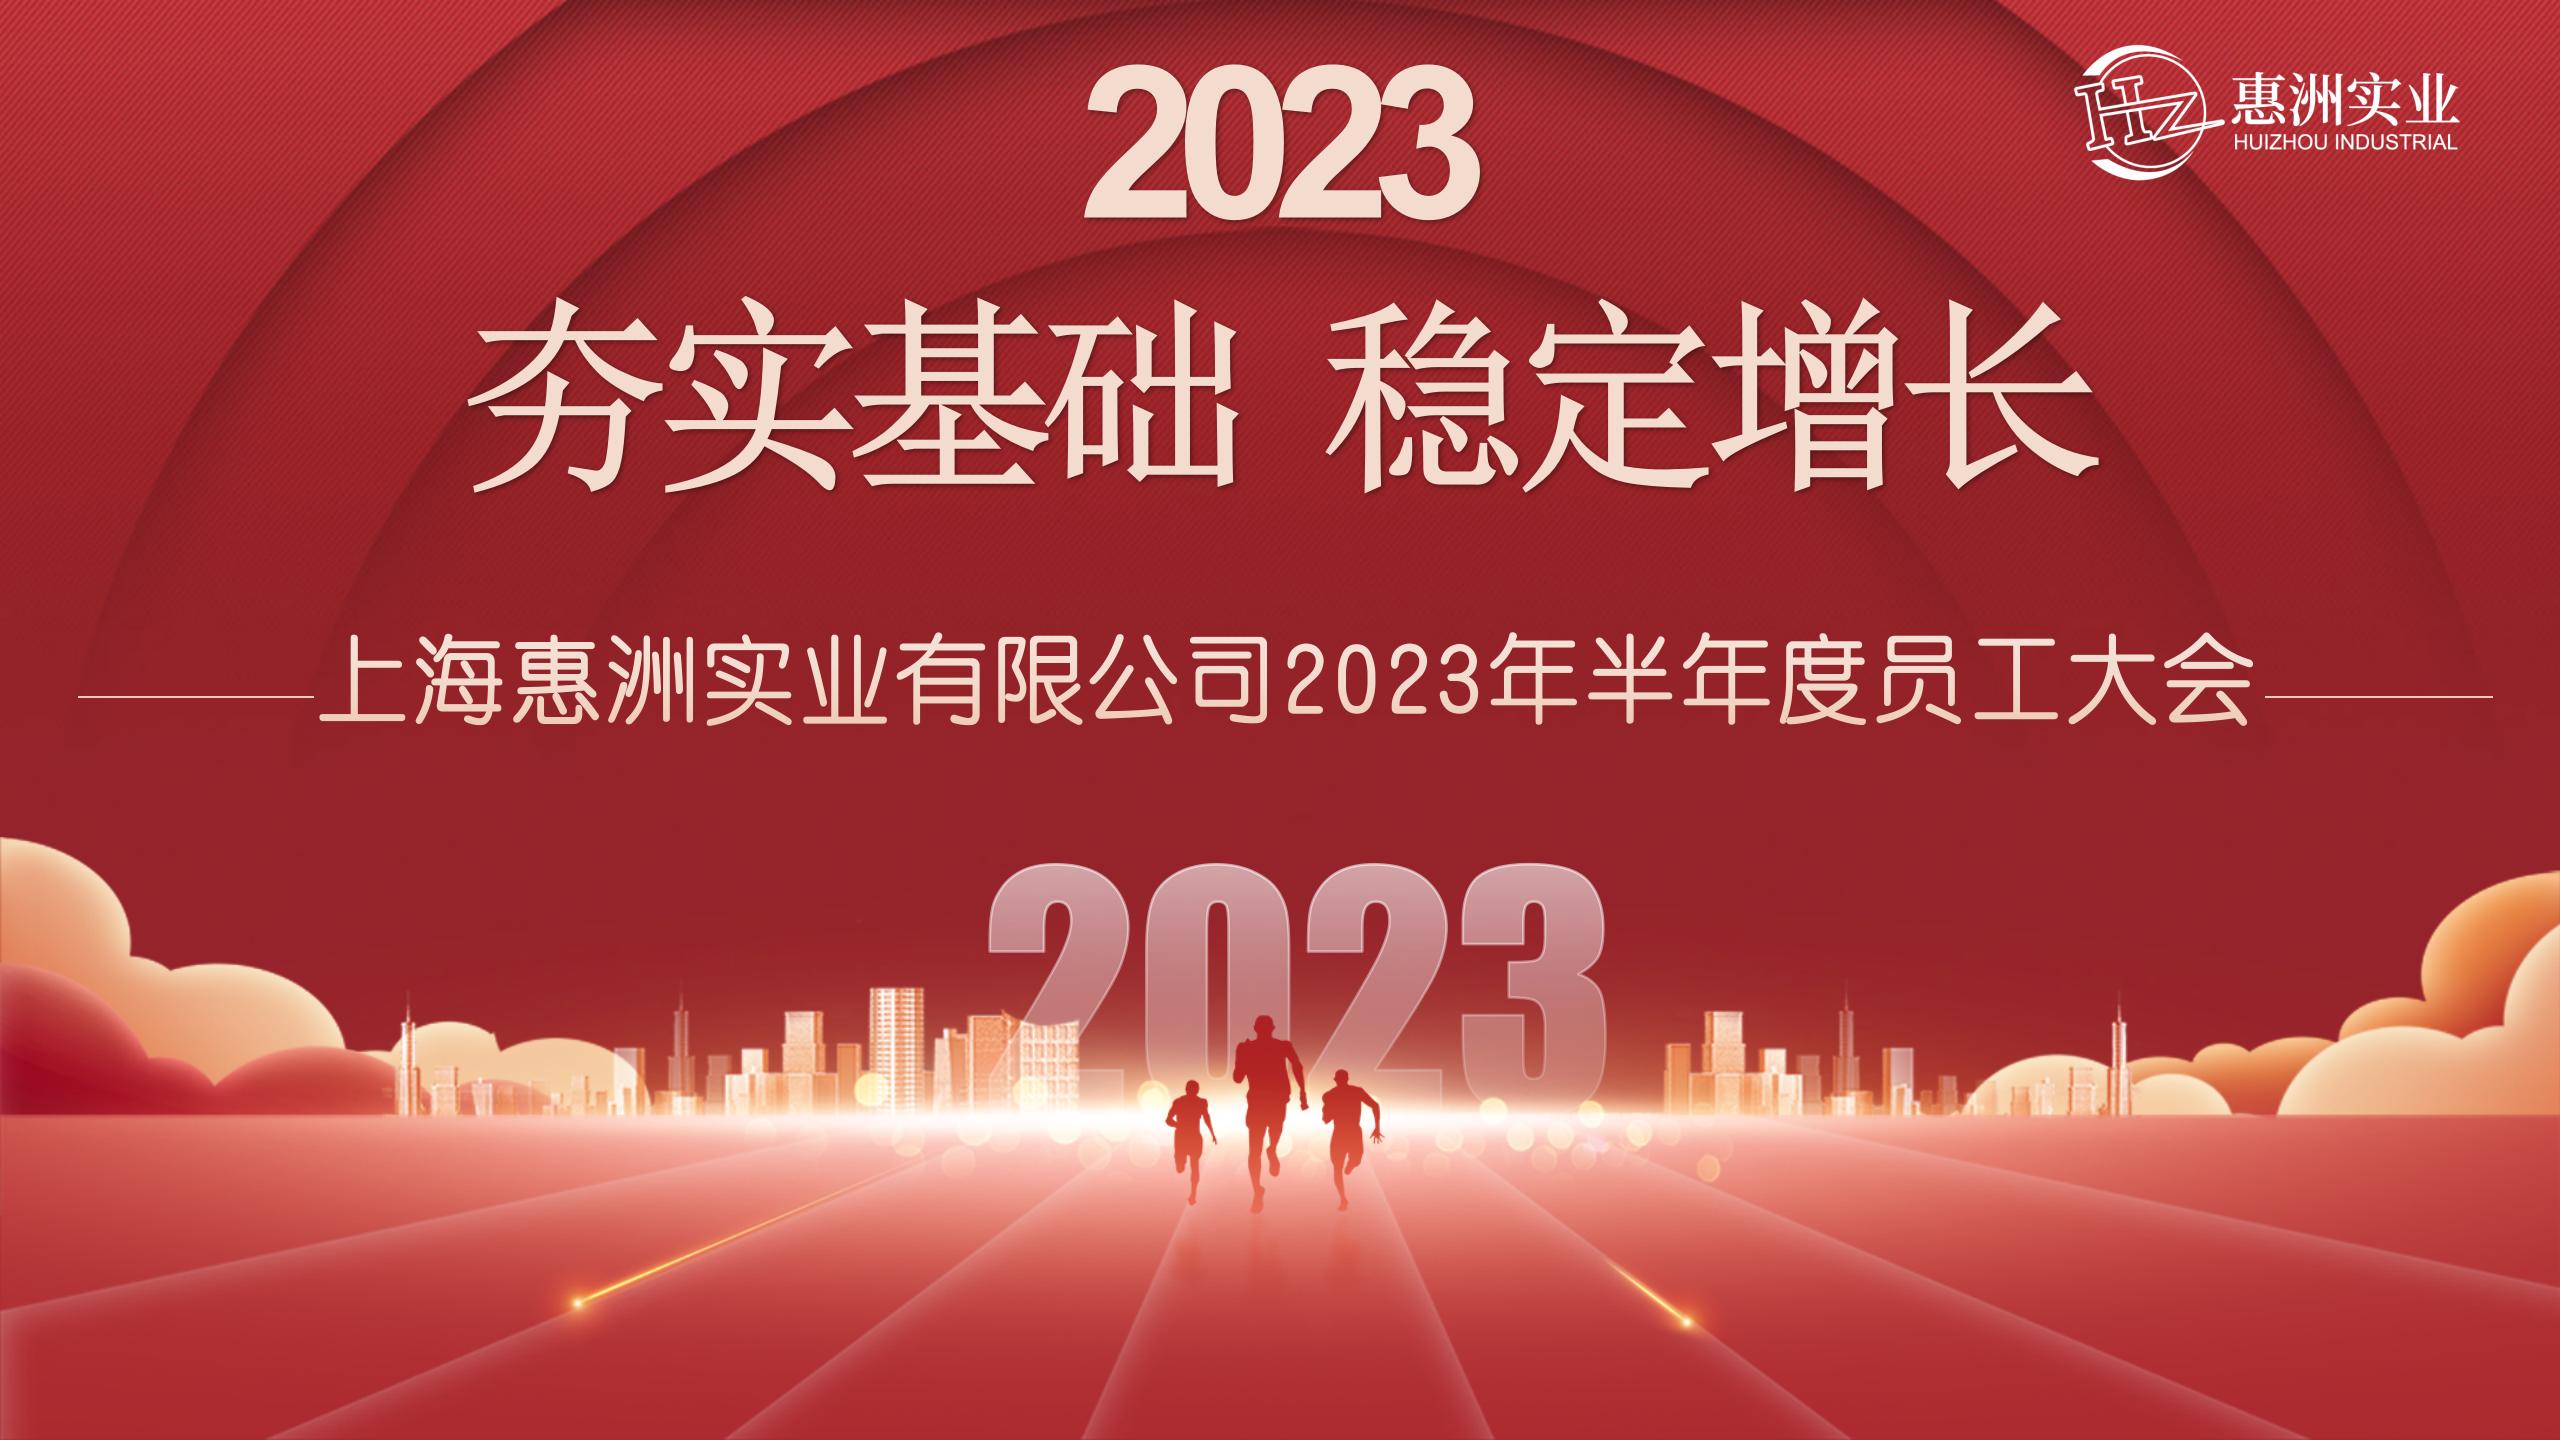 Huizhou Semi-annual Staff Meeting 2023